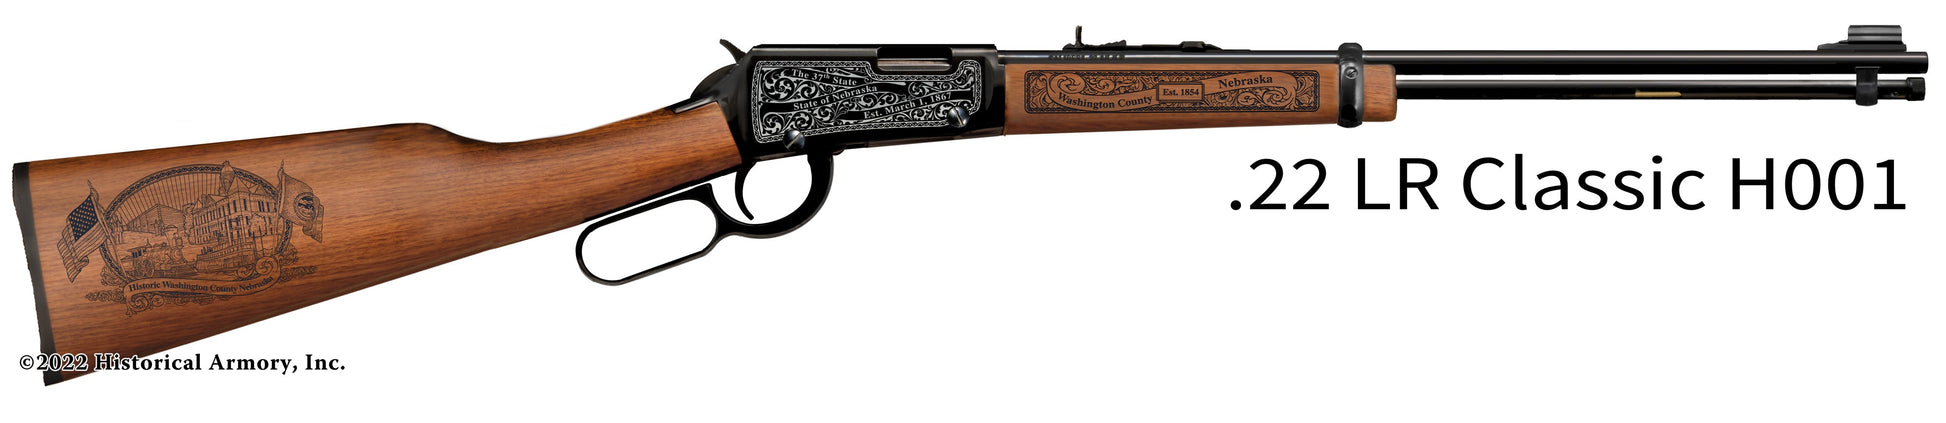 Washington County Nebraska Engraved Henry H001 Rifle